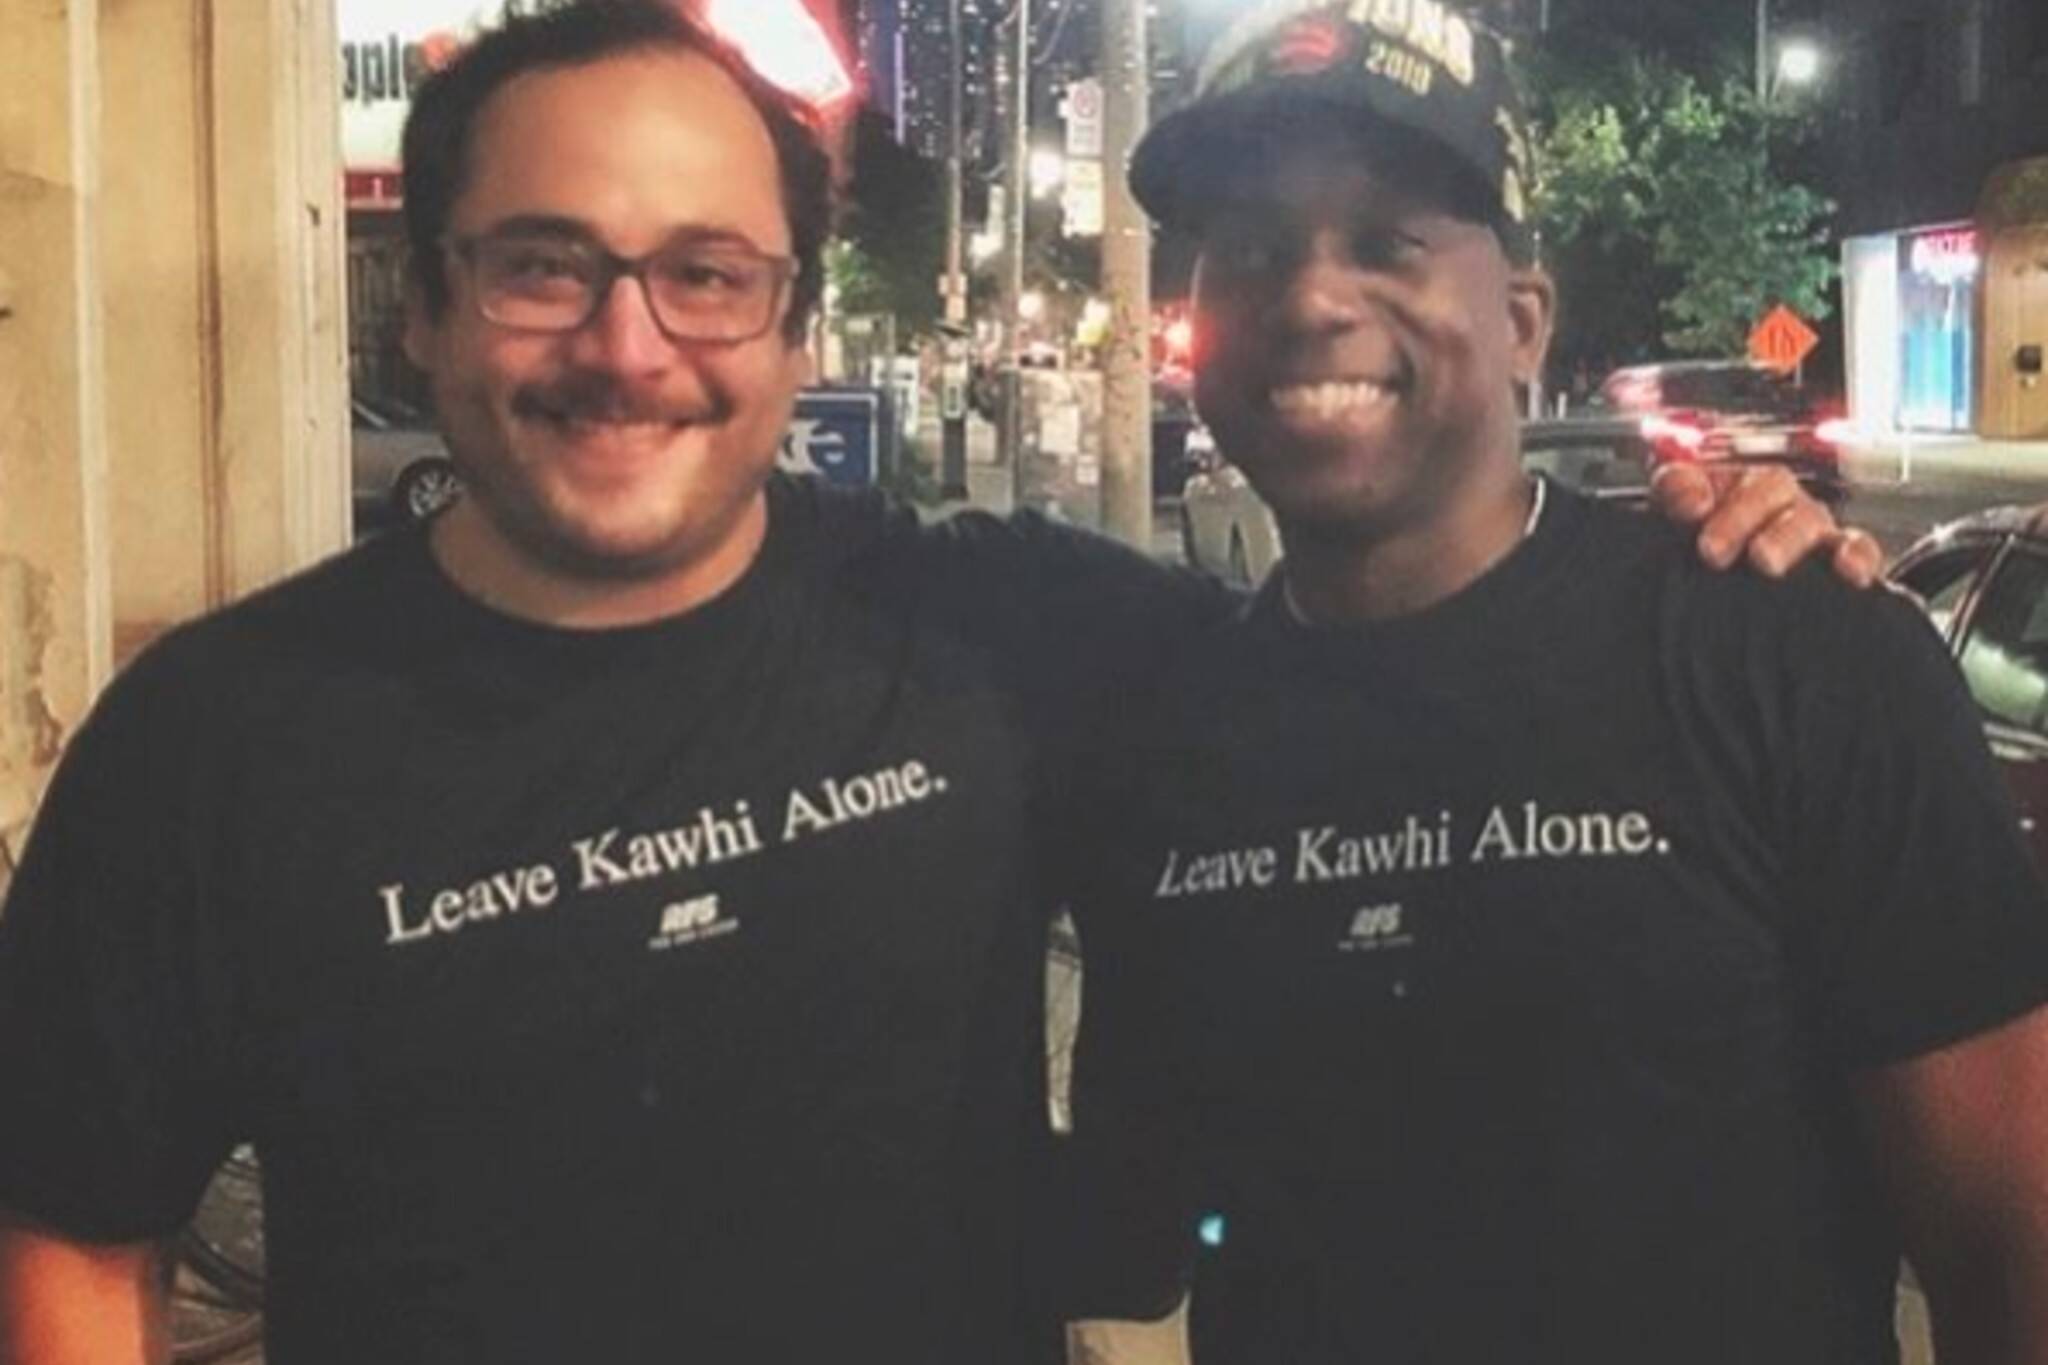 Two guys in Toronto made hilarious knock-off New Balance Kawhi shirts